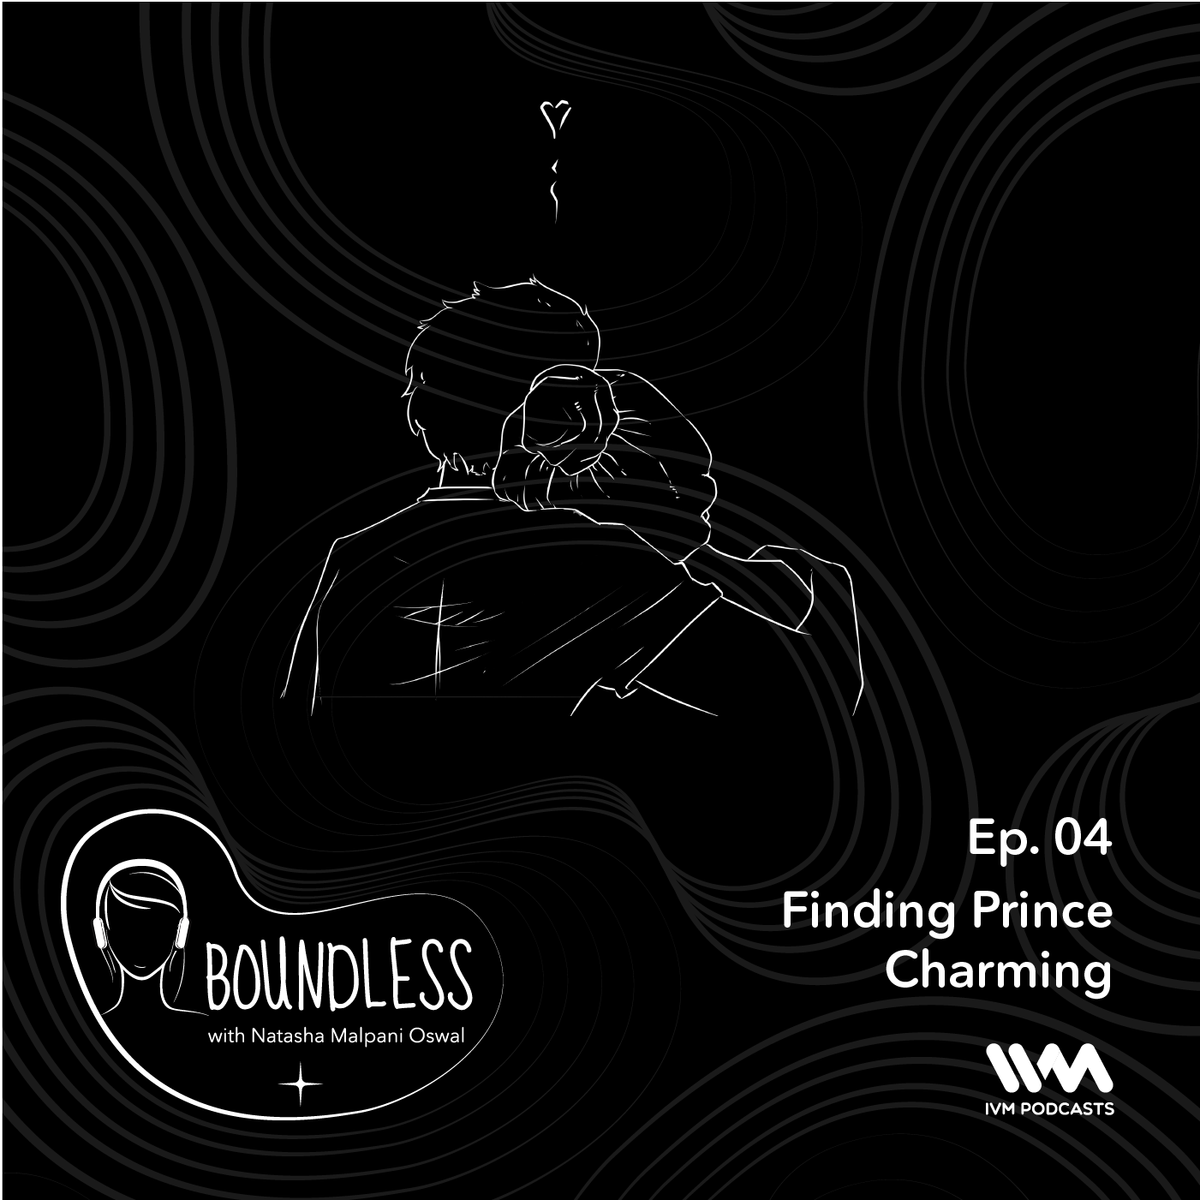 Ep. 04: Finding Prince Charming